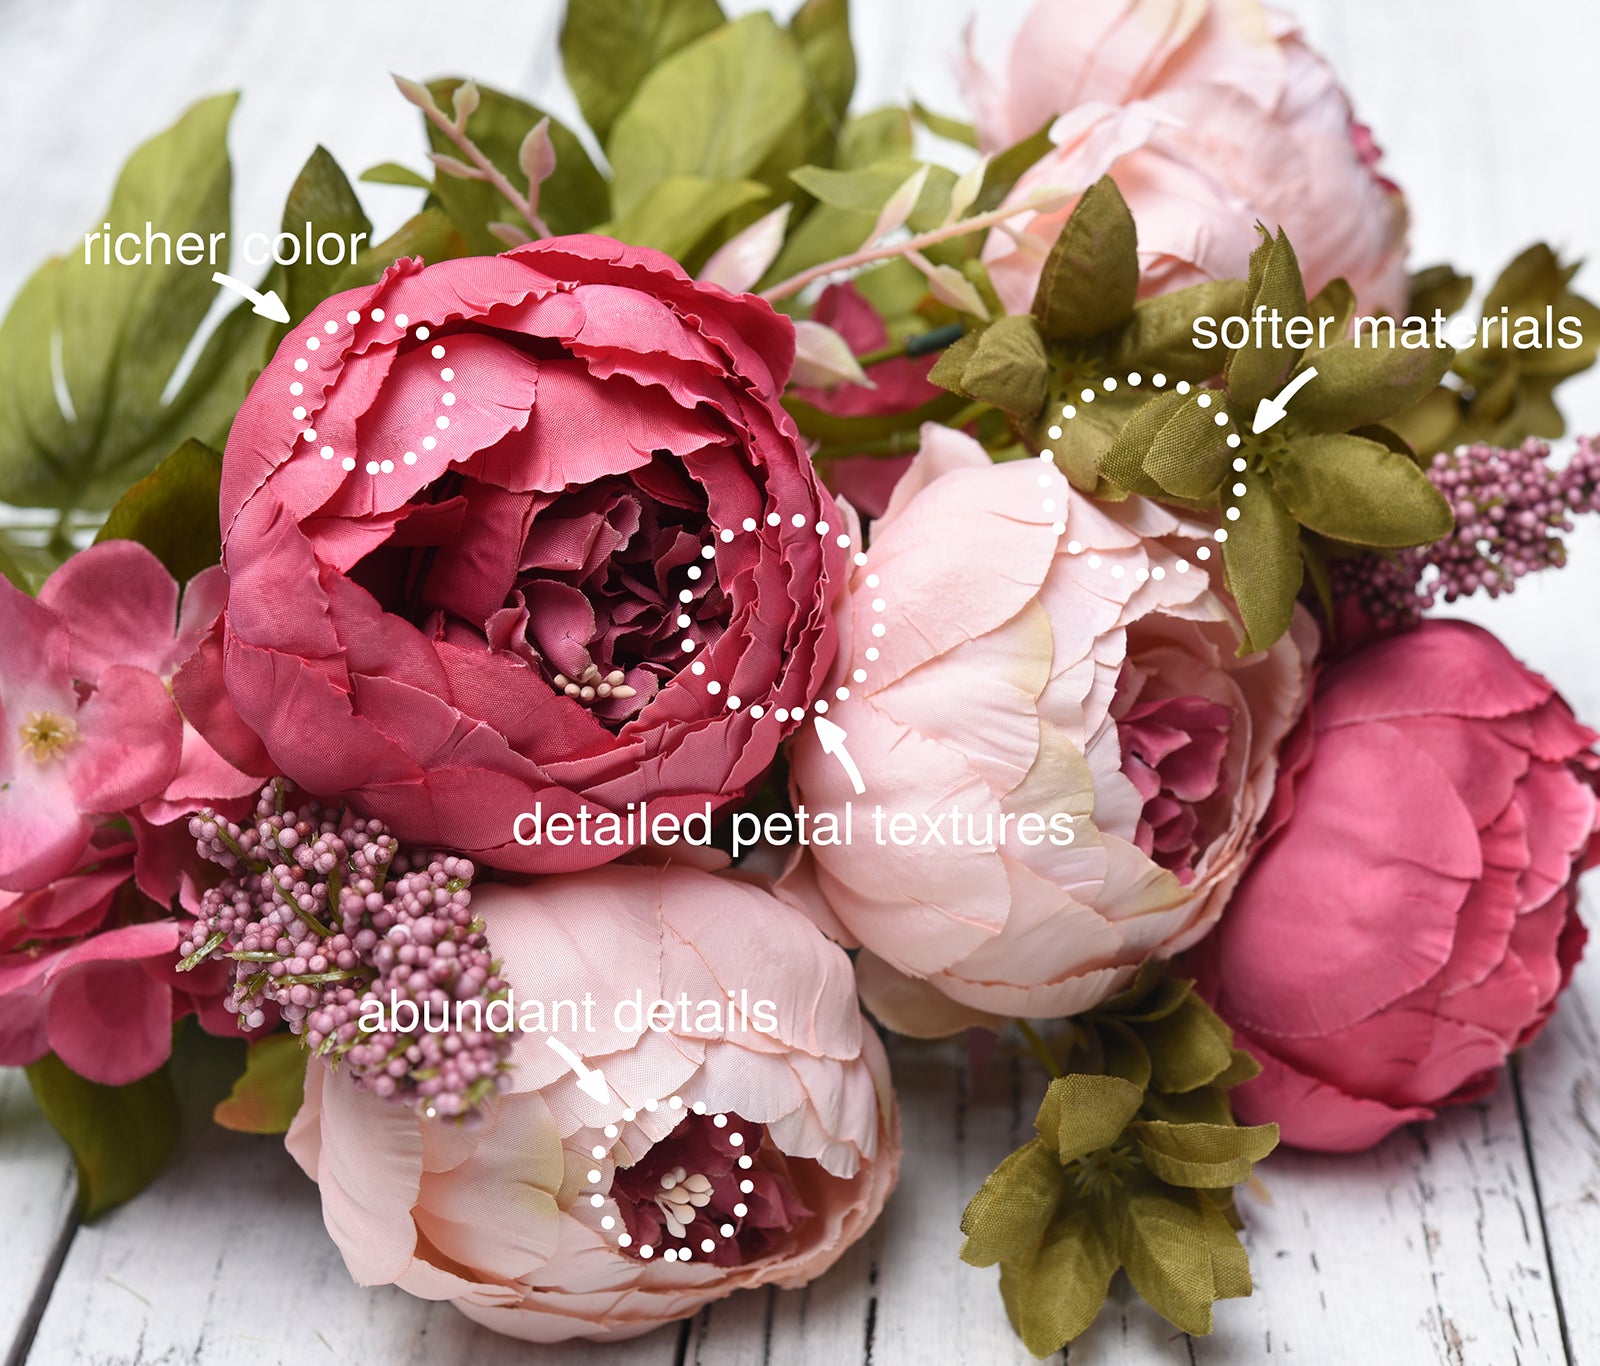 FiveSeasonStuff (Beige)Silk Peonies Artificial Flower Bouquet